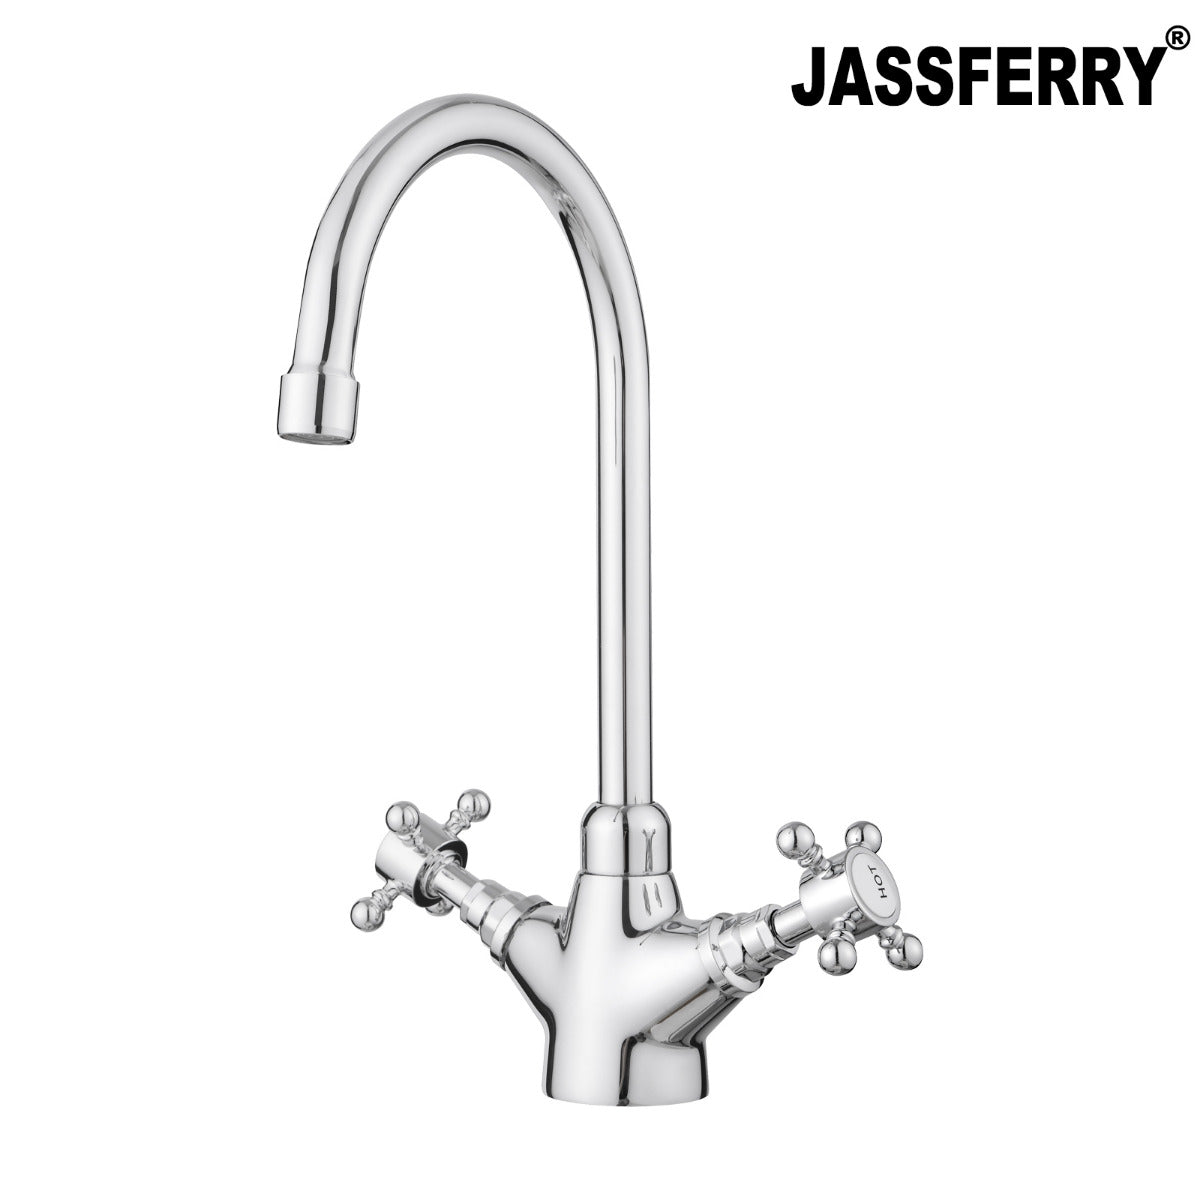 JassferryJASSFERRY Kitchen Tap Two Cross Handles Swivel Spout Sink Mixer Tap ChromeKitchen taps